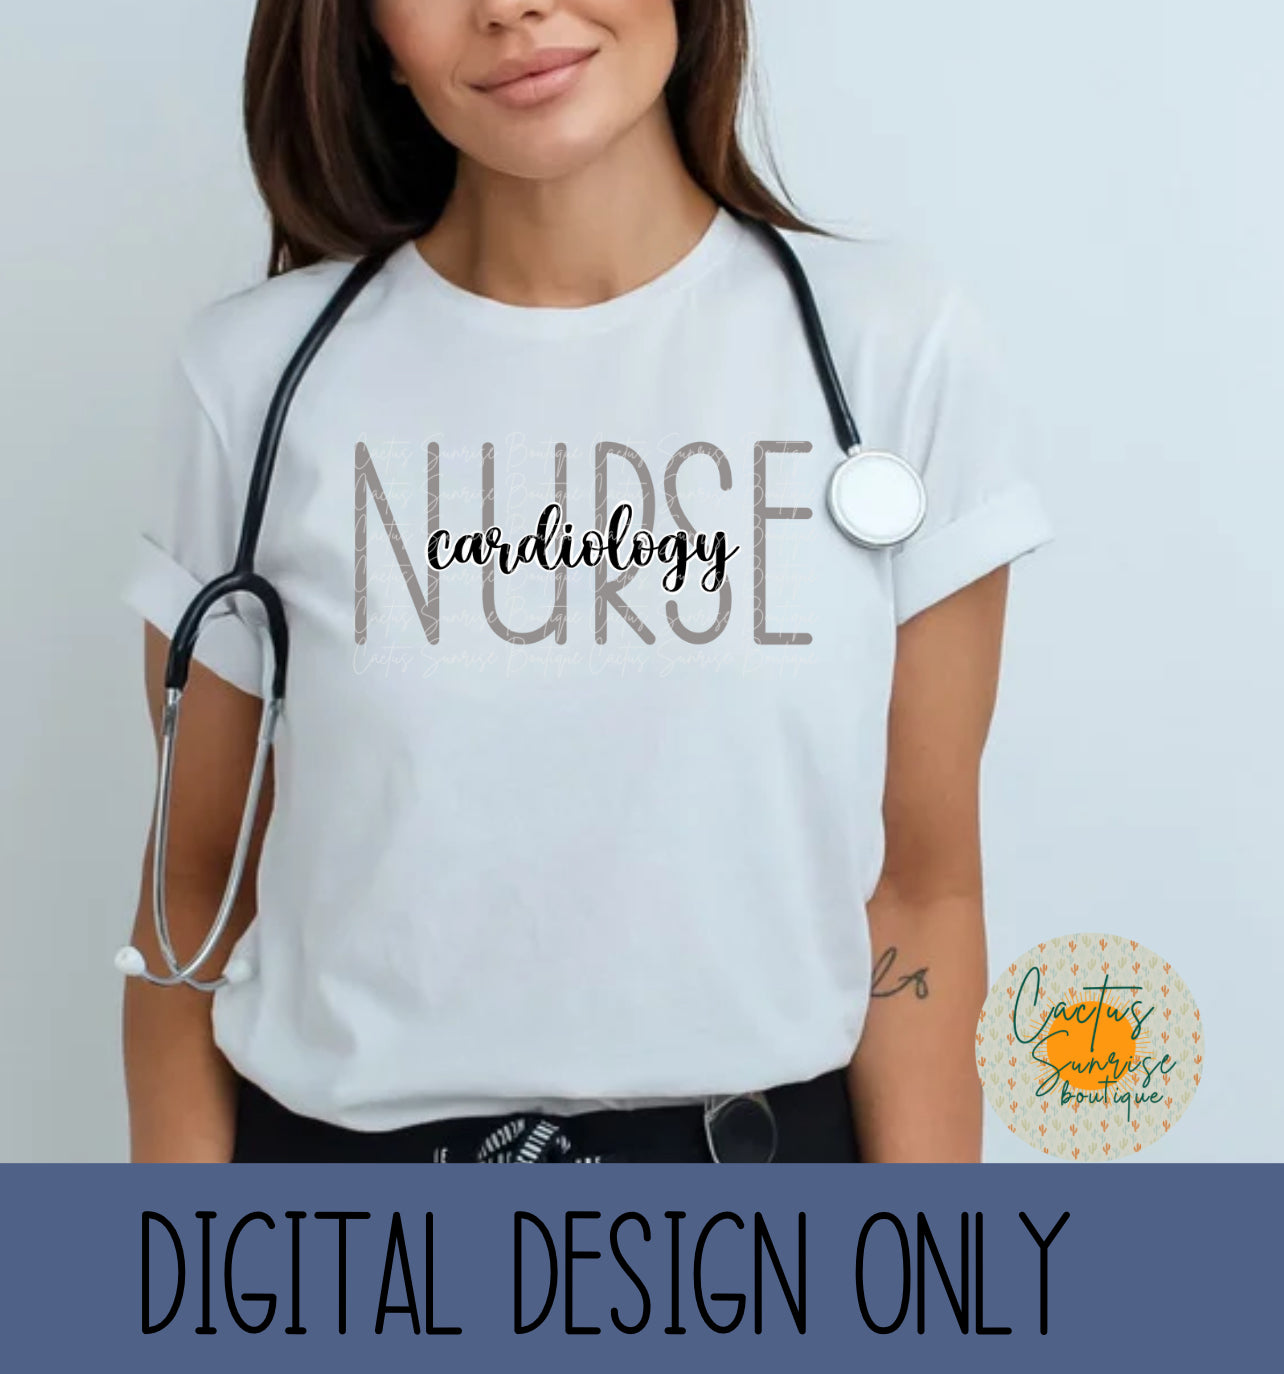 Cardiology Nurse Grey Digital file- No physical product